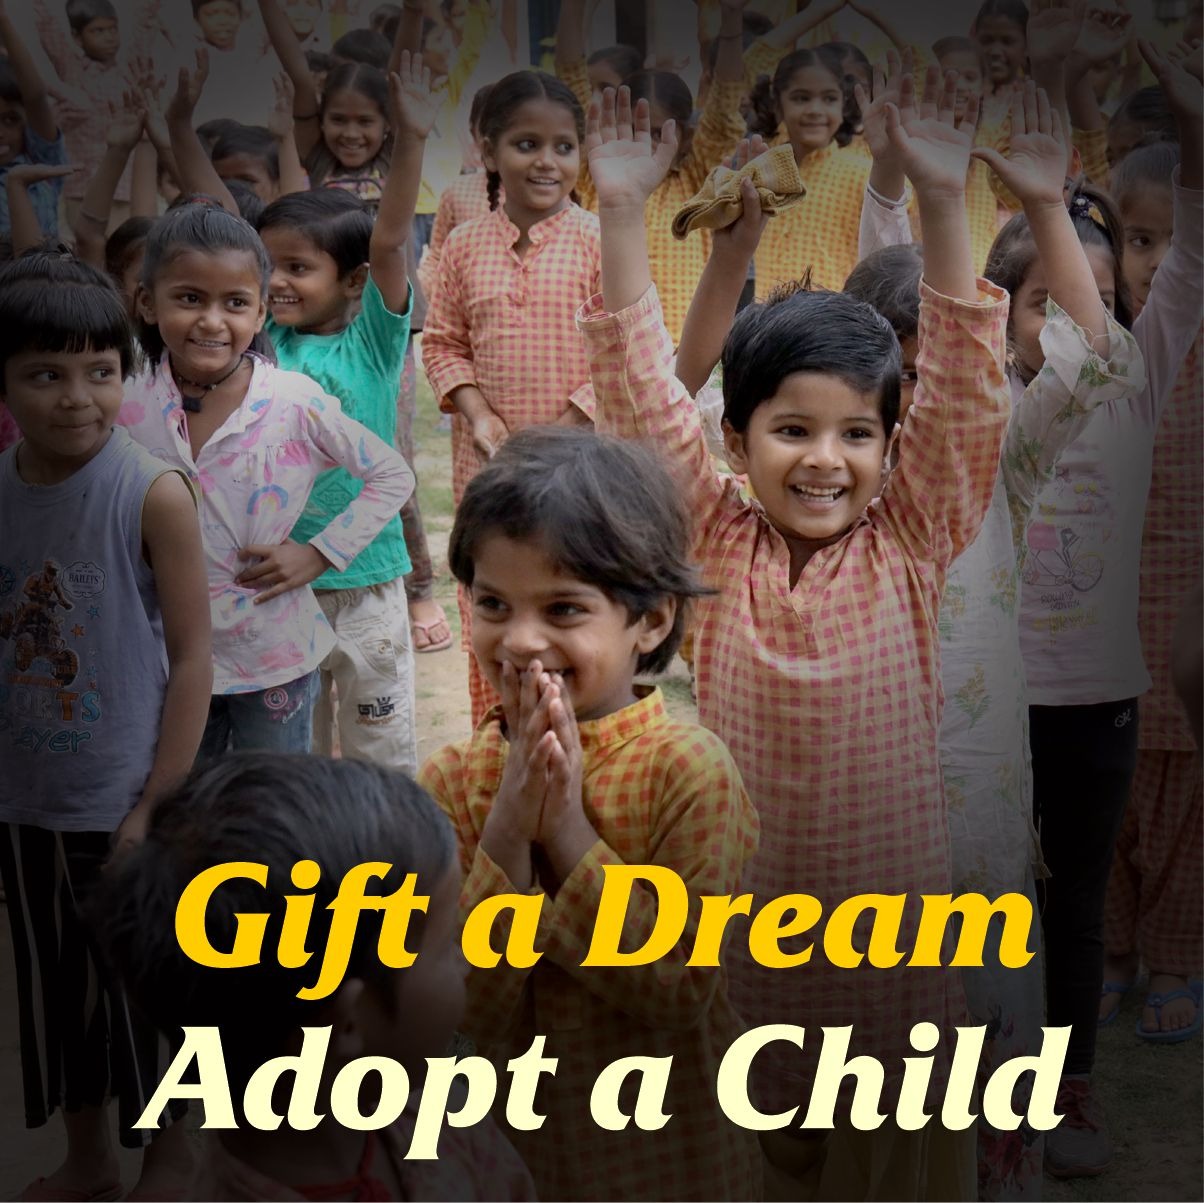 Gift a dream, adopt a child